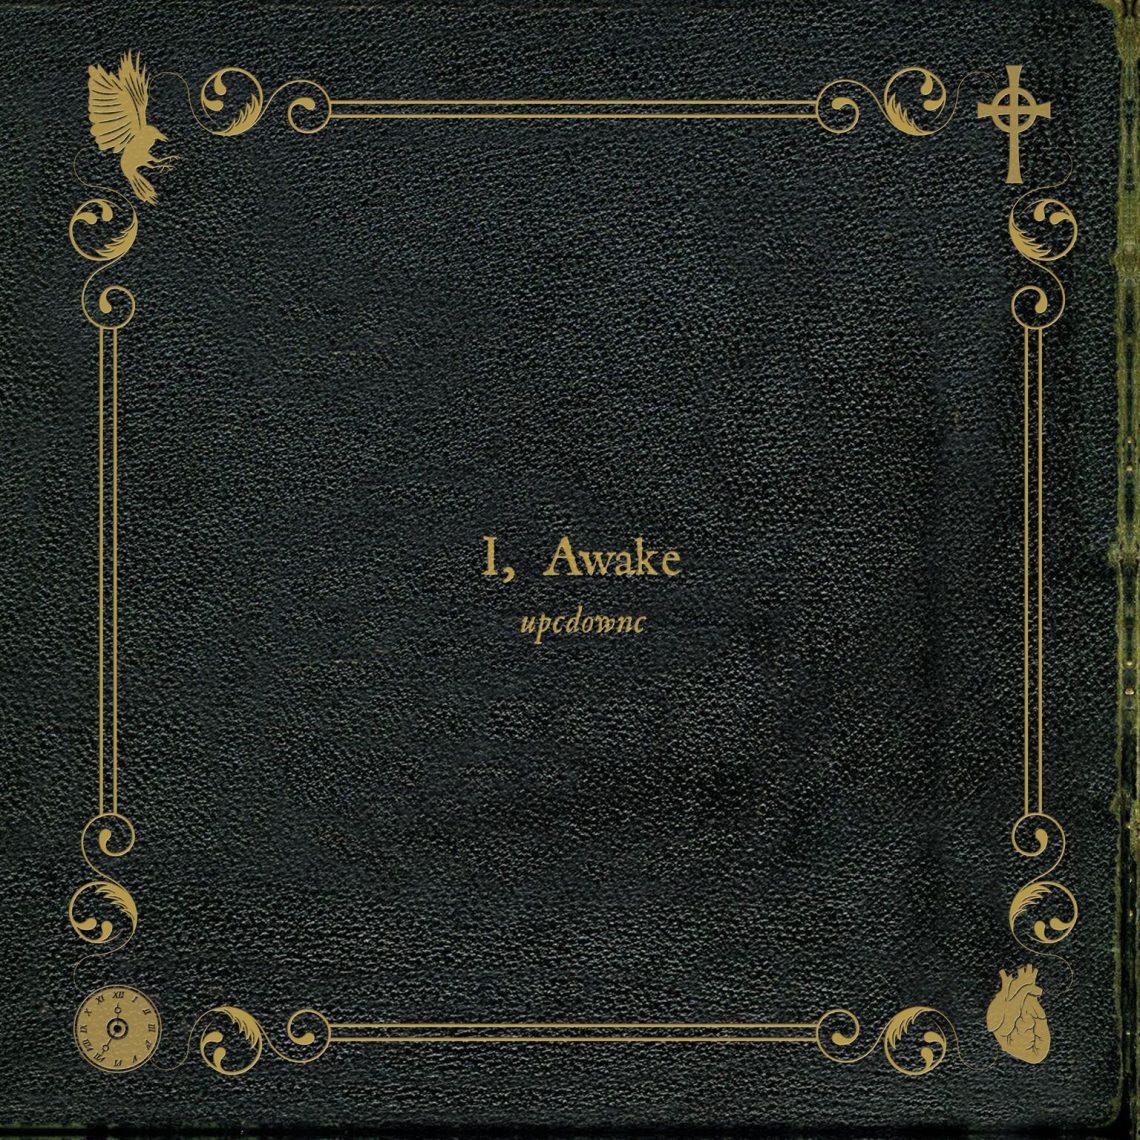 UPCDOWNC ANNOUNCE NEW ALBUM ‘I, AWAKE’